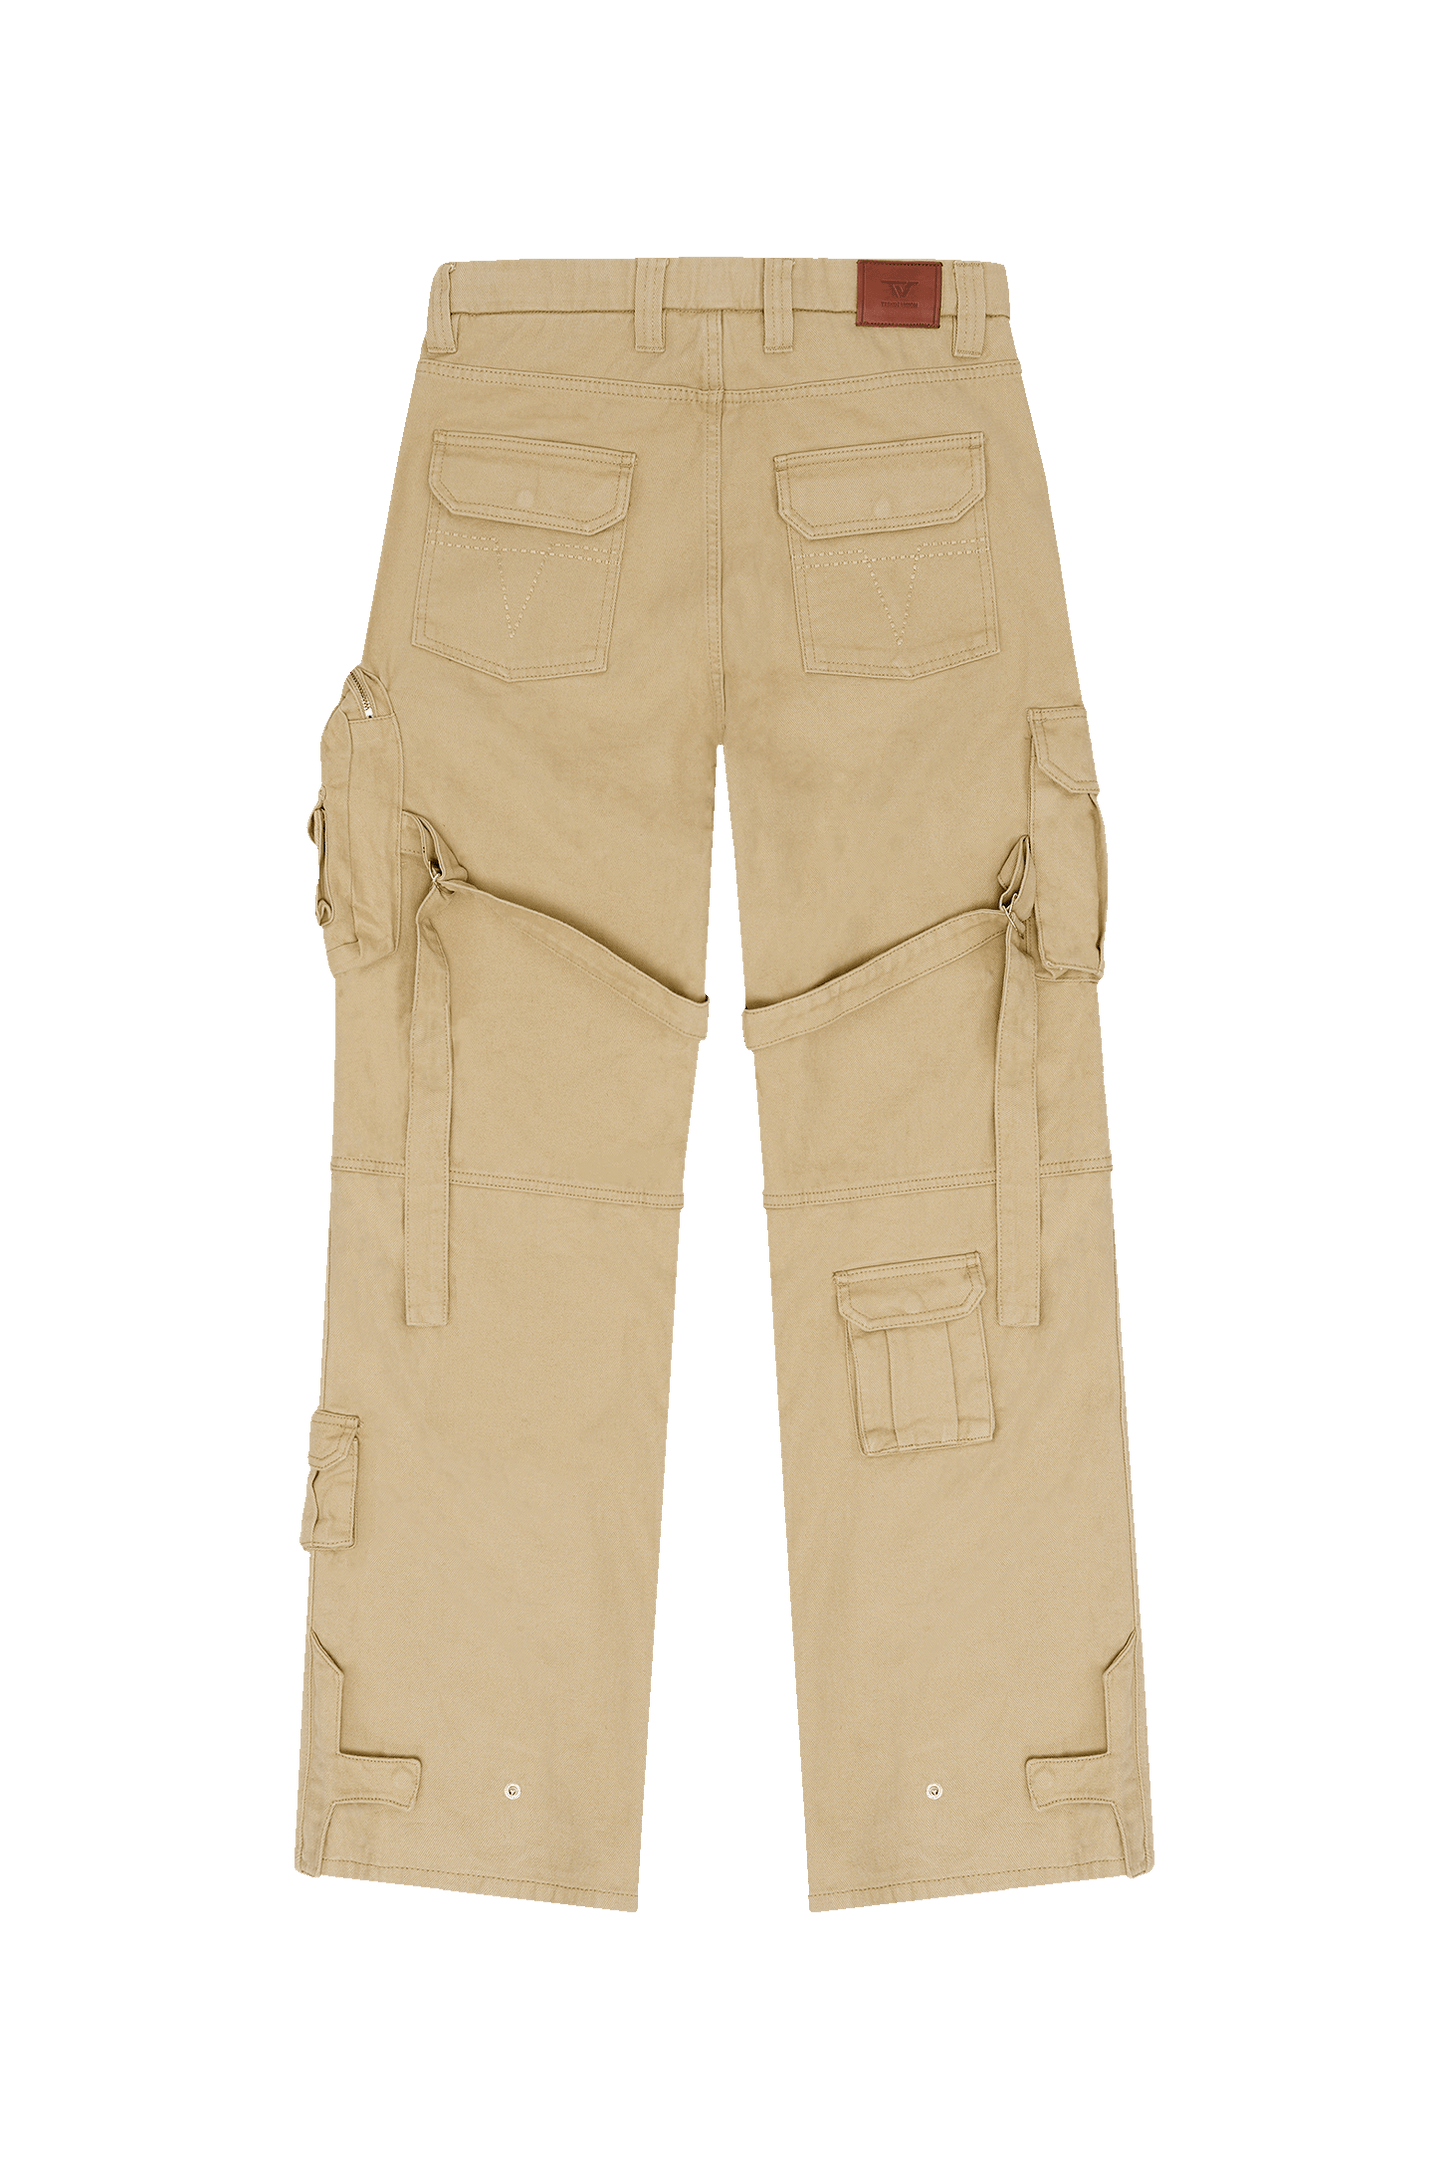 Pocket Detail Cargo Trousers - #beige #Cargo #Detail #Pocket